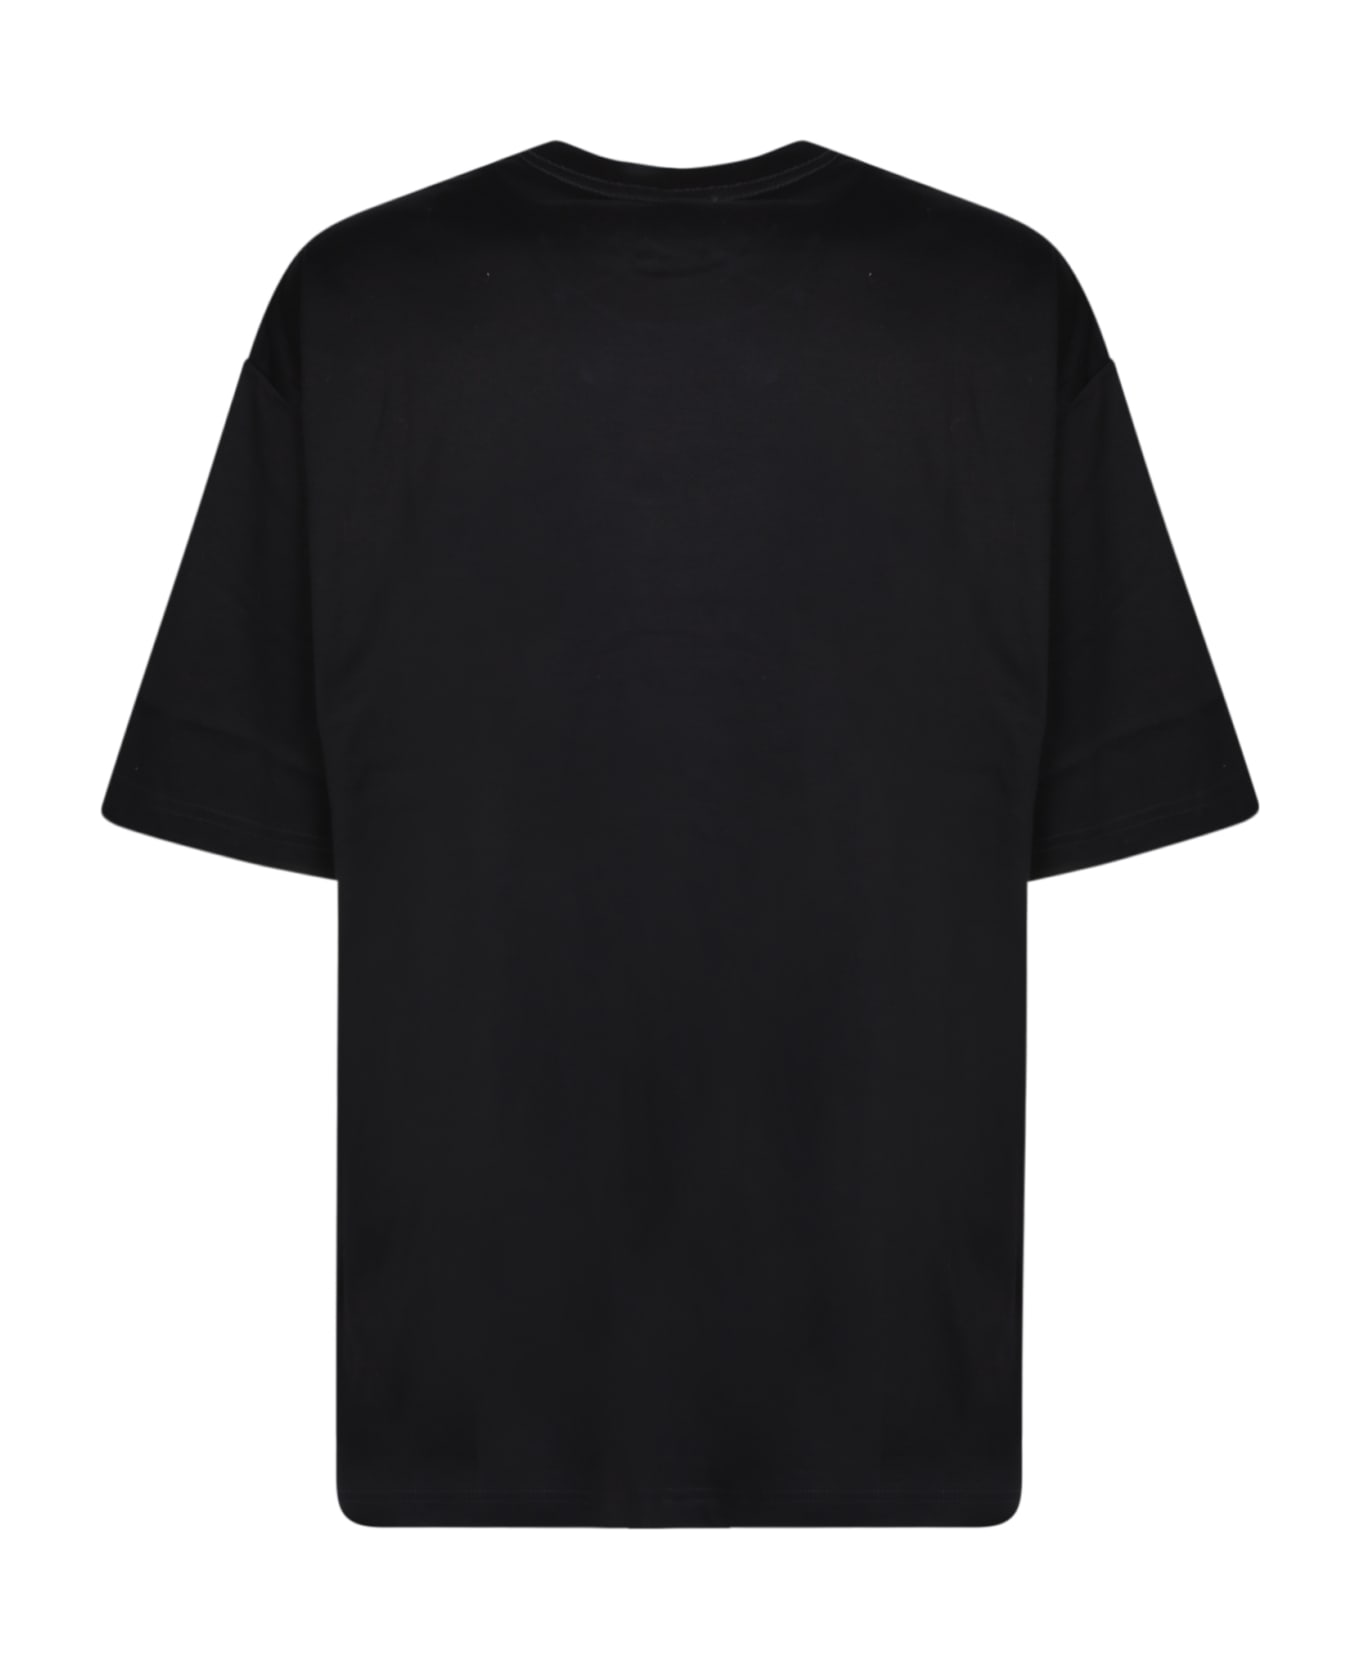 Lanvin Curblance Black T-shirt - Black